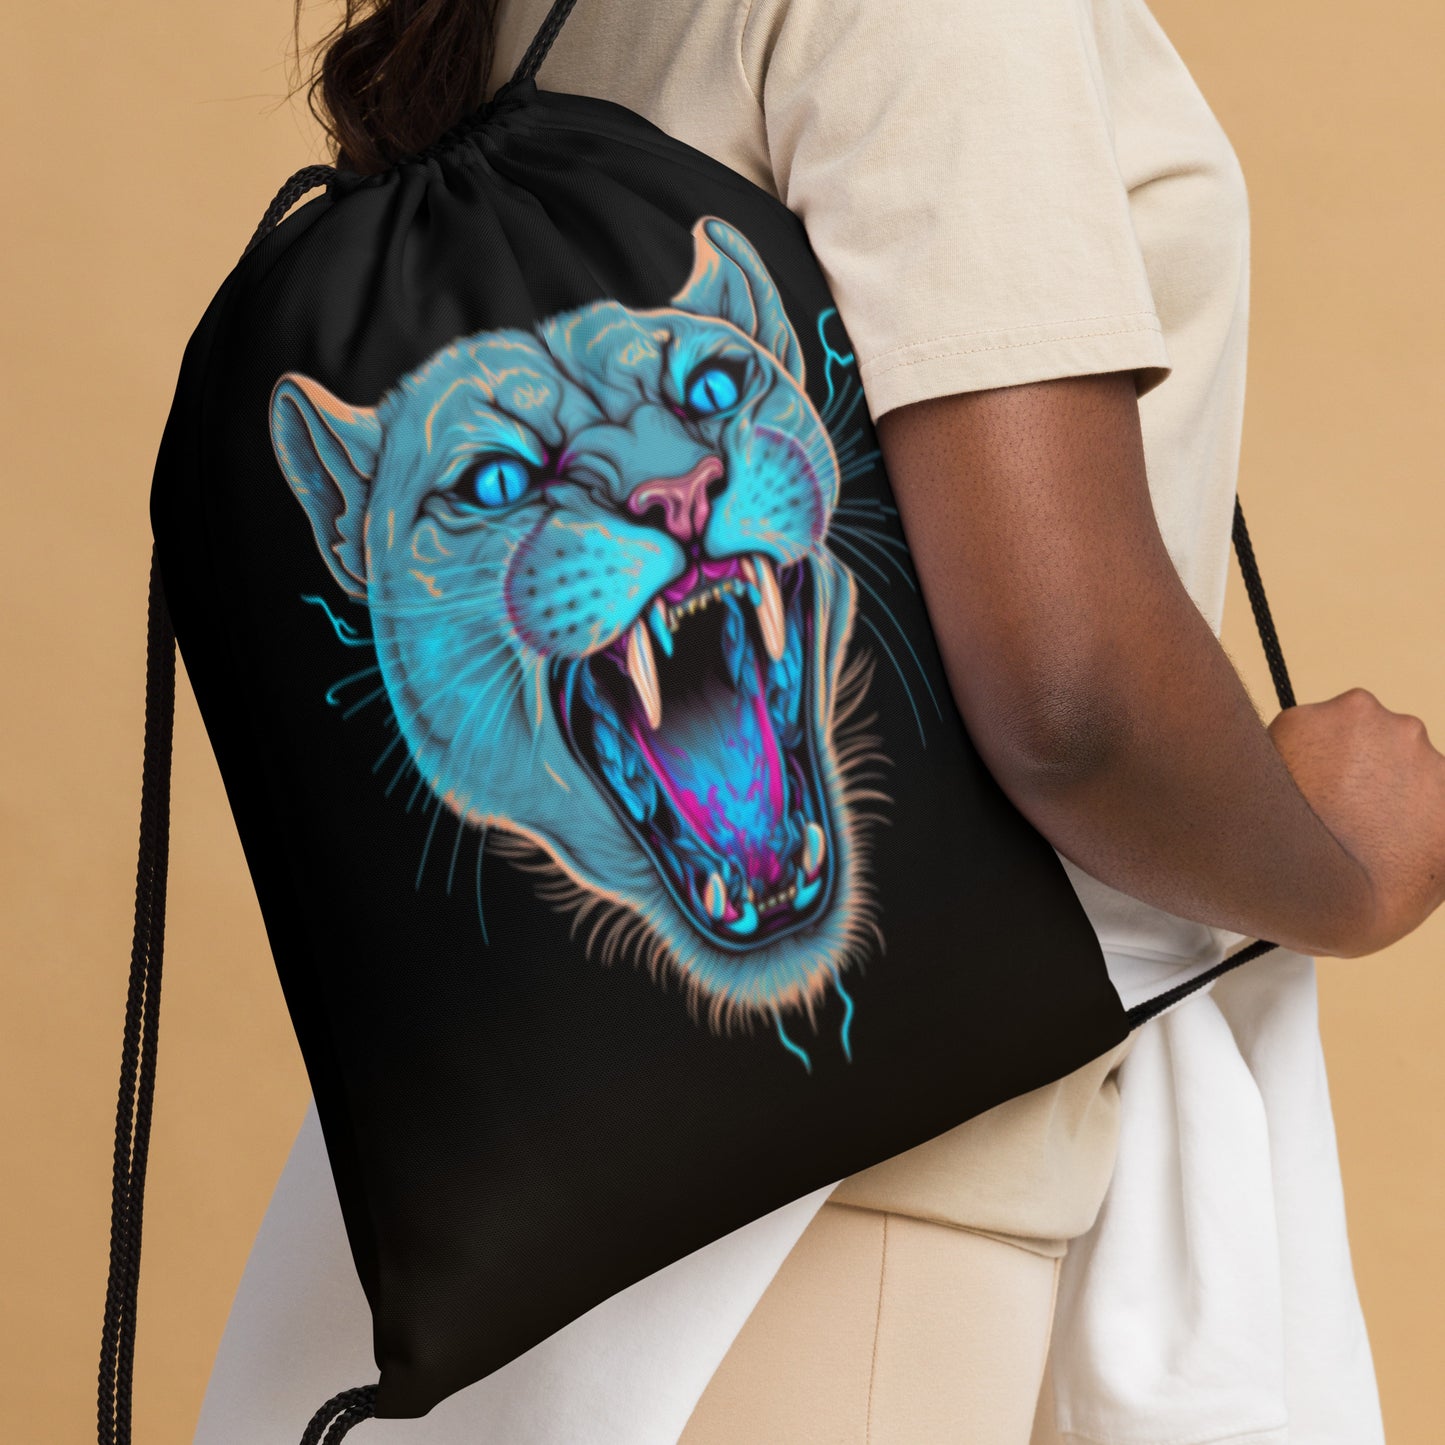 Static Cougar Drawstring Bag